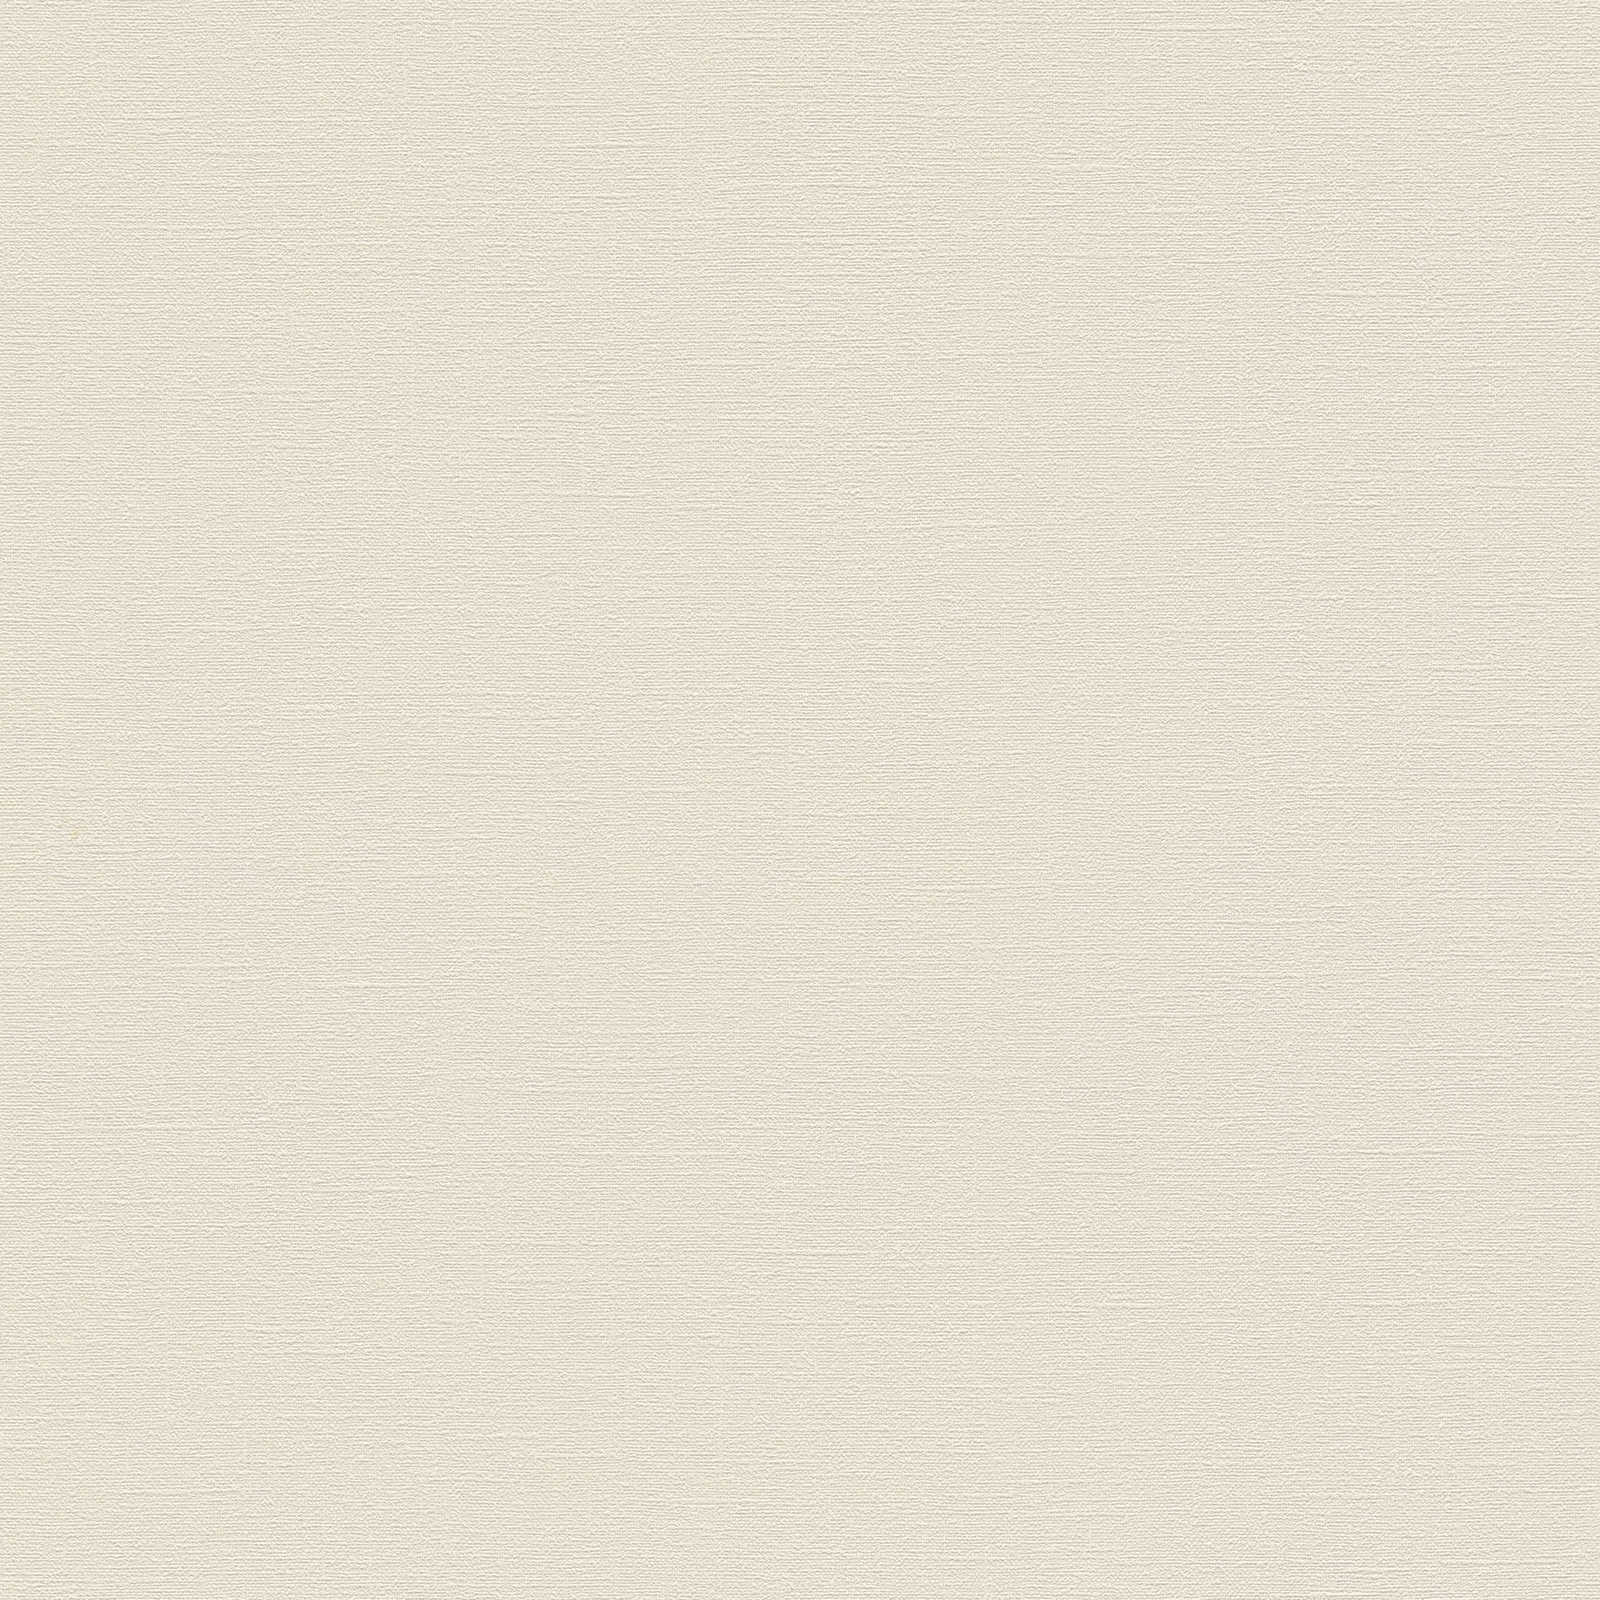 Non-woven wallpaper plain with light structure PVC-free - beige, cream
